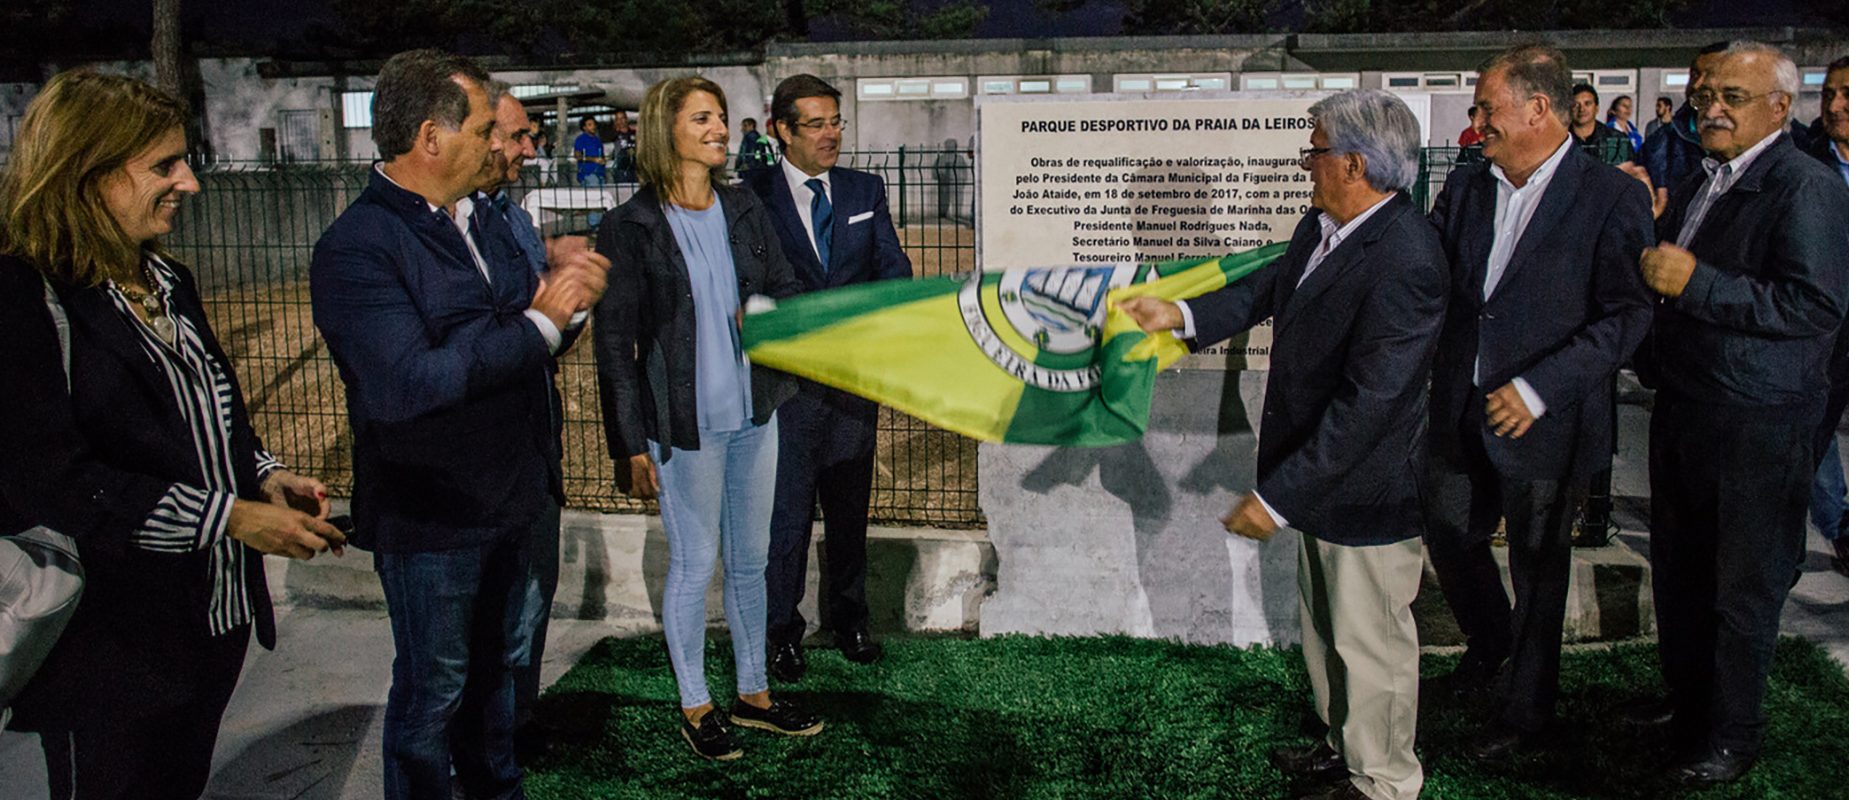 Inauguration of the sports complex of Praia da Leirosa